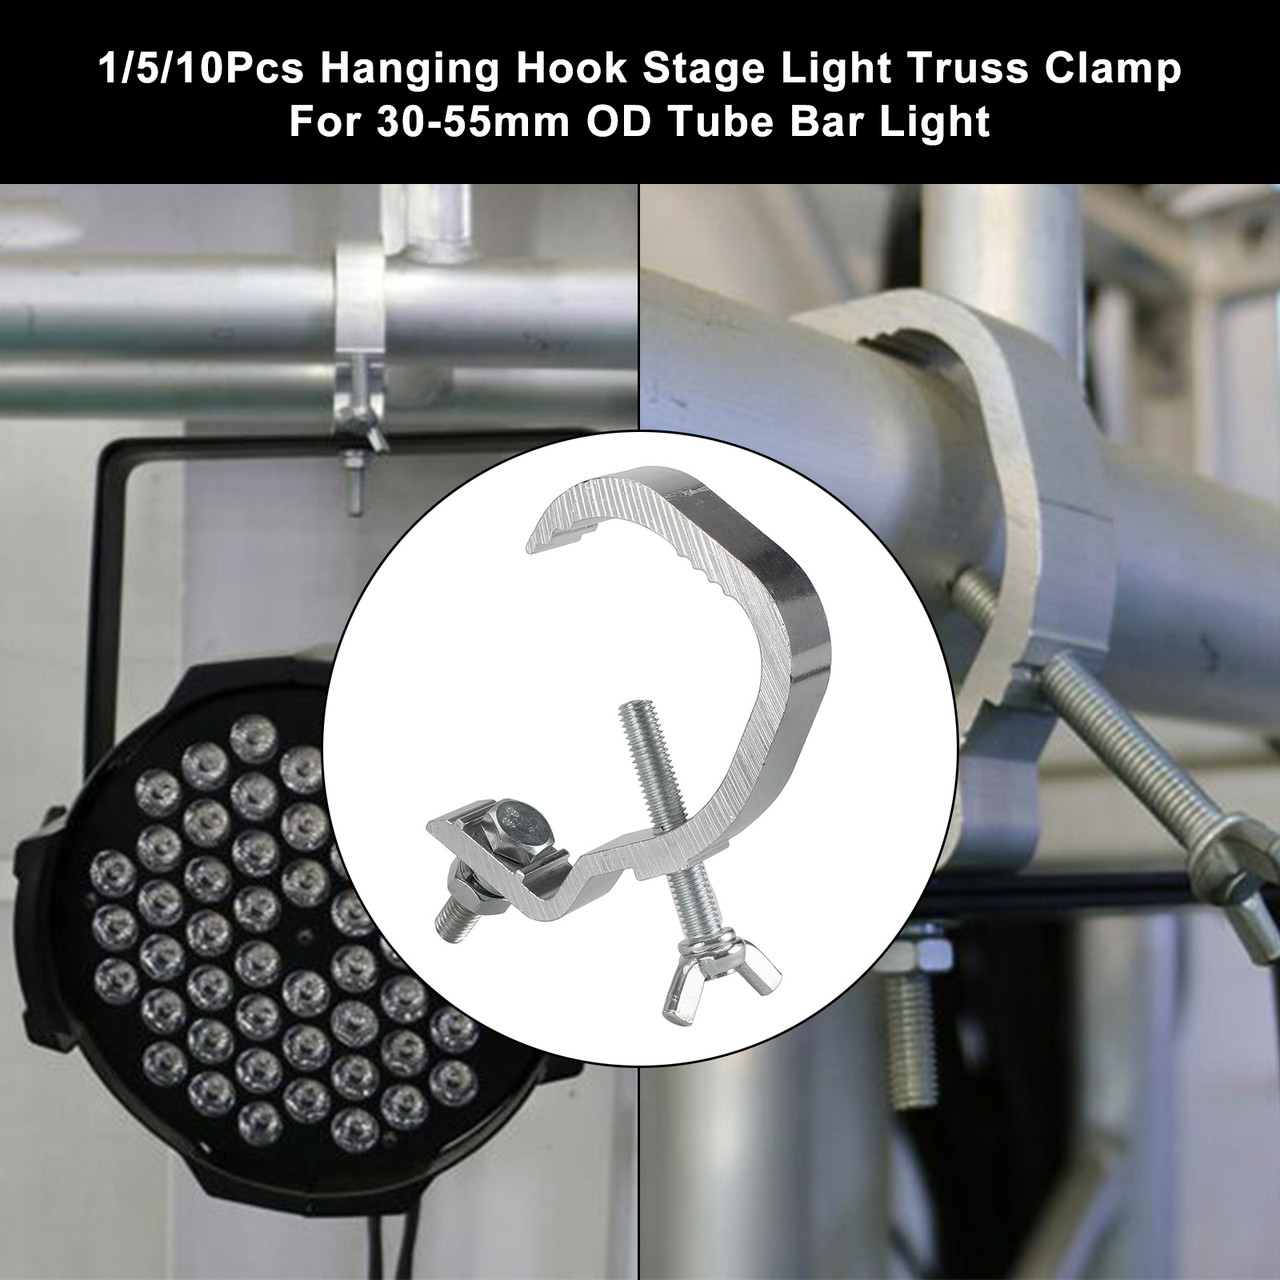 10PCS L Hanging Hook Stage Light Truss Clamp For 30-55mm OD Tube Bar Light